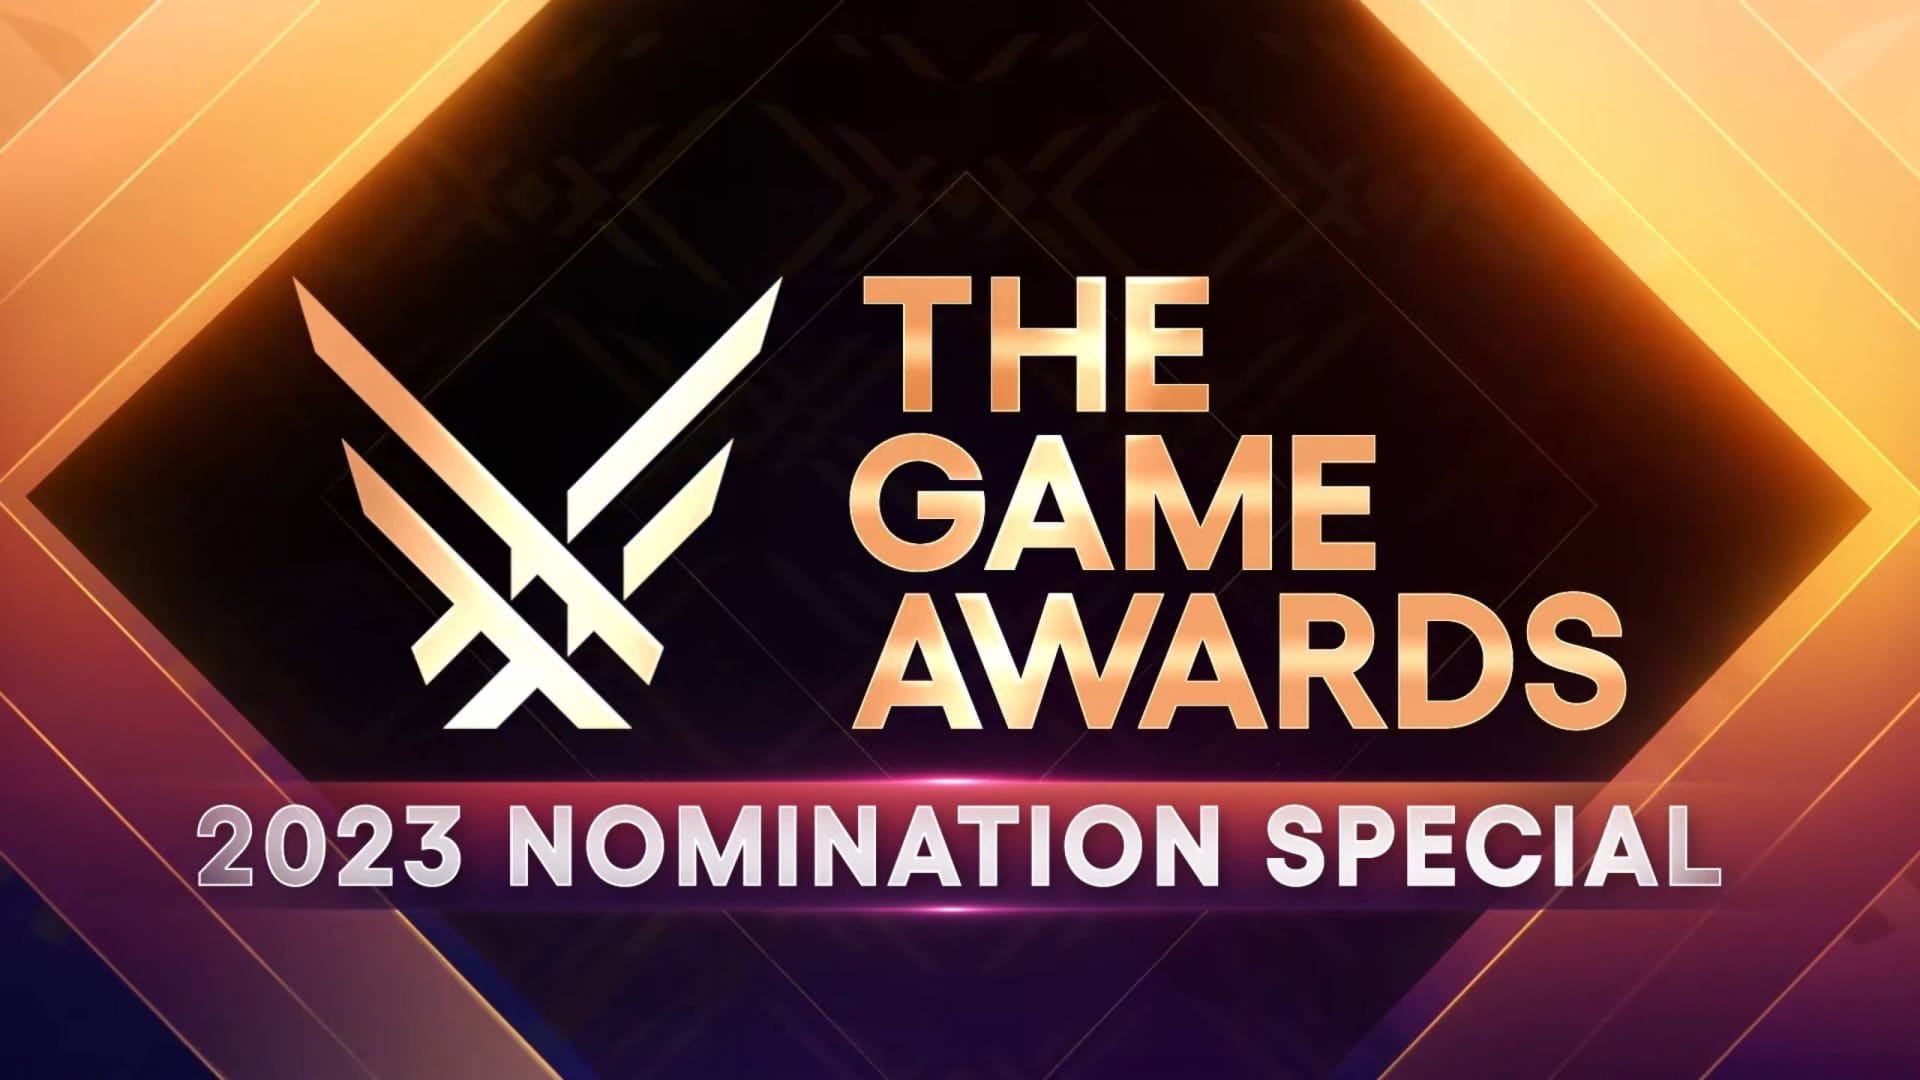 Alan Wake 2 and Baldur's Gate 3 lead Game Awards 2023 nominations